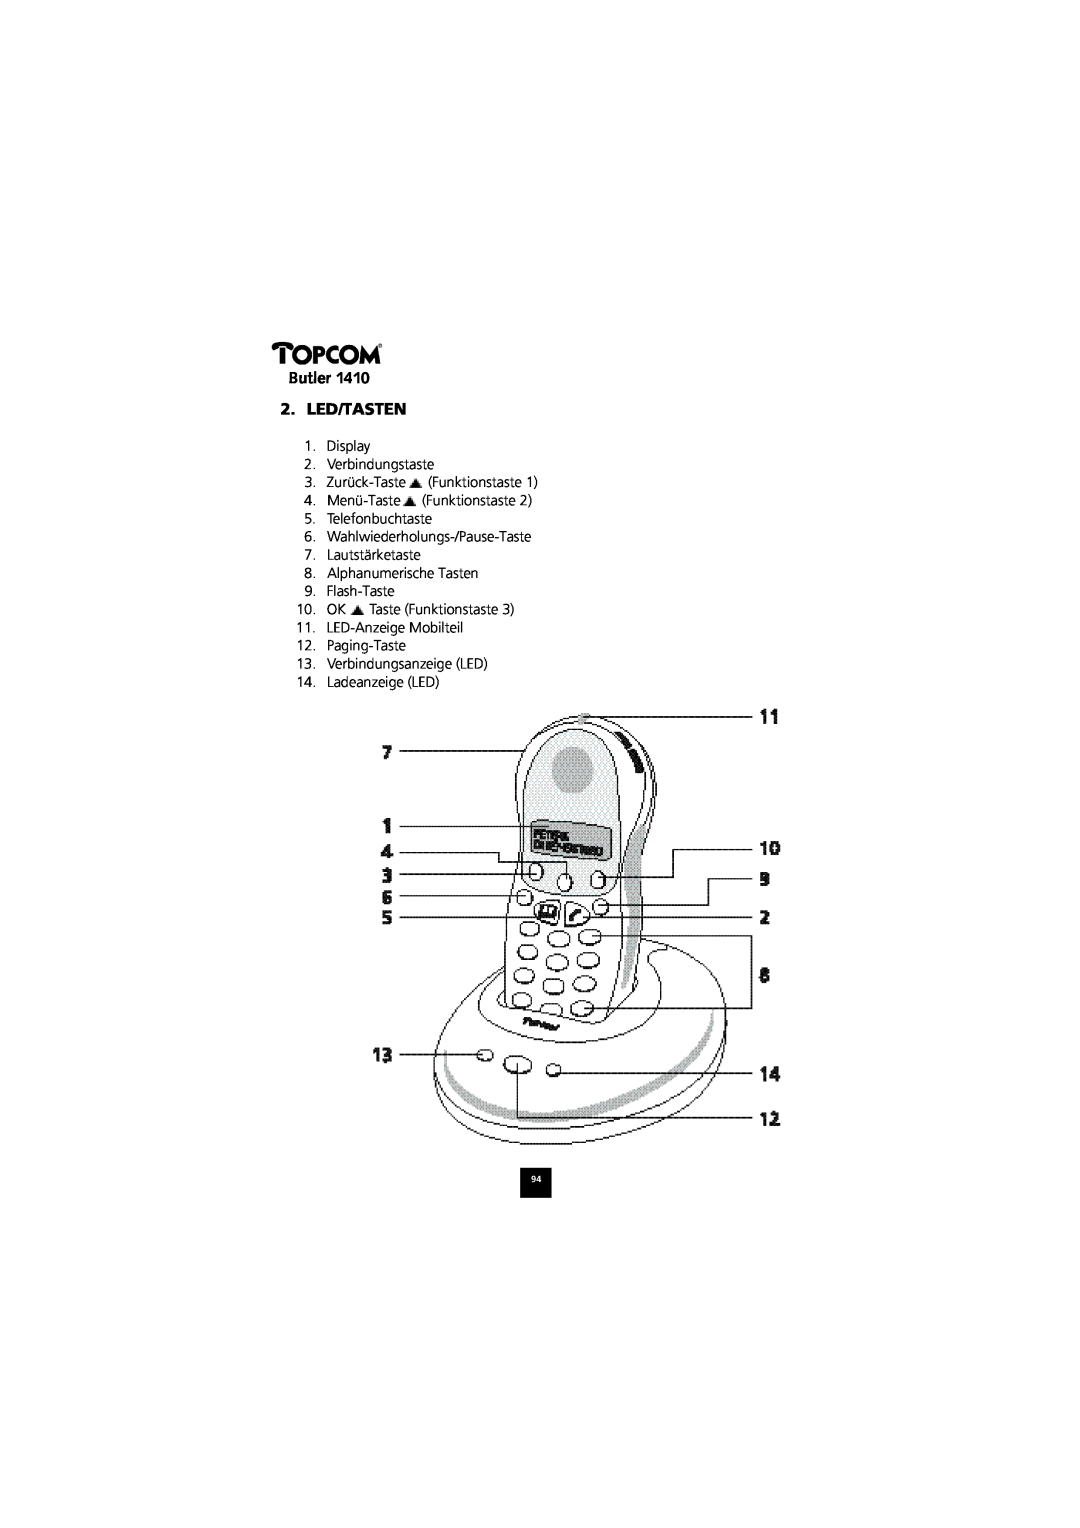 Topcom 1410 manual Butler 2. LED/TASTEN, Display 2. Verbindungstaste 3. Zurück-Taste Funktionstaste, Ladeanzeige LED 